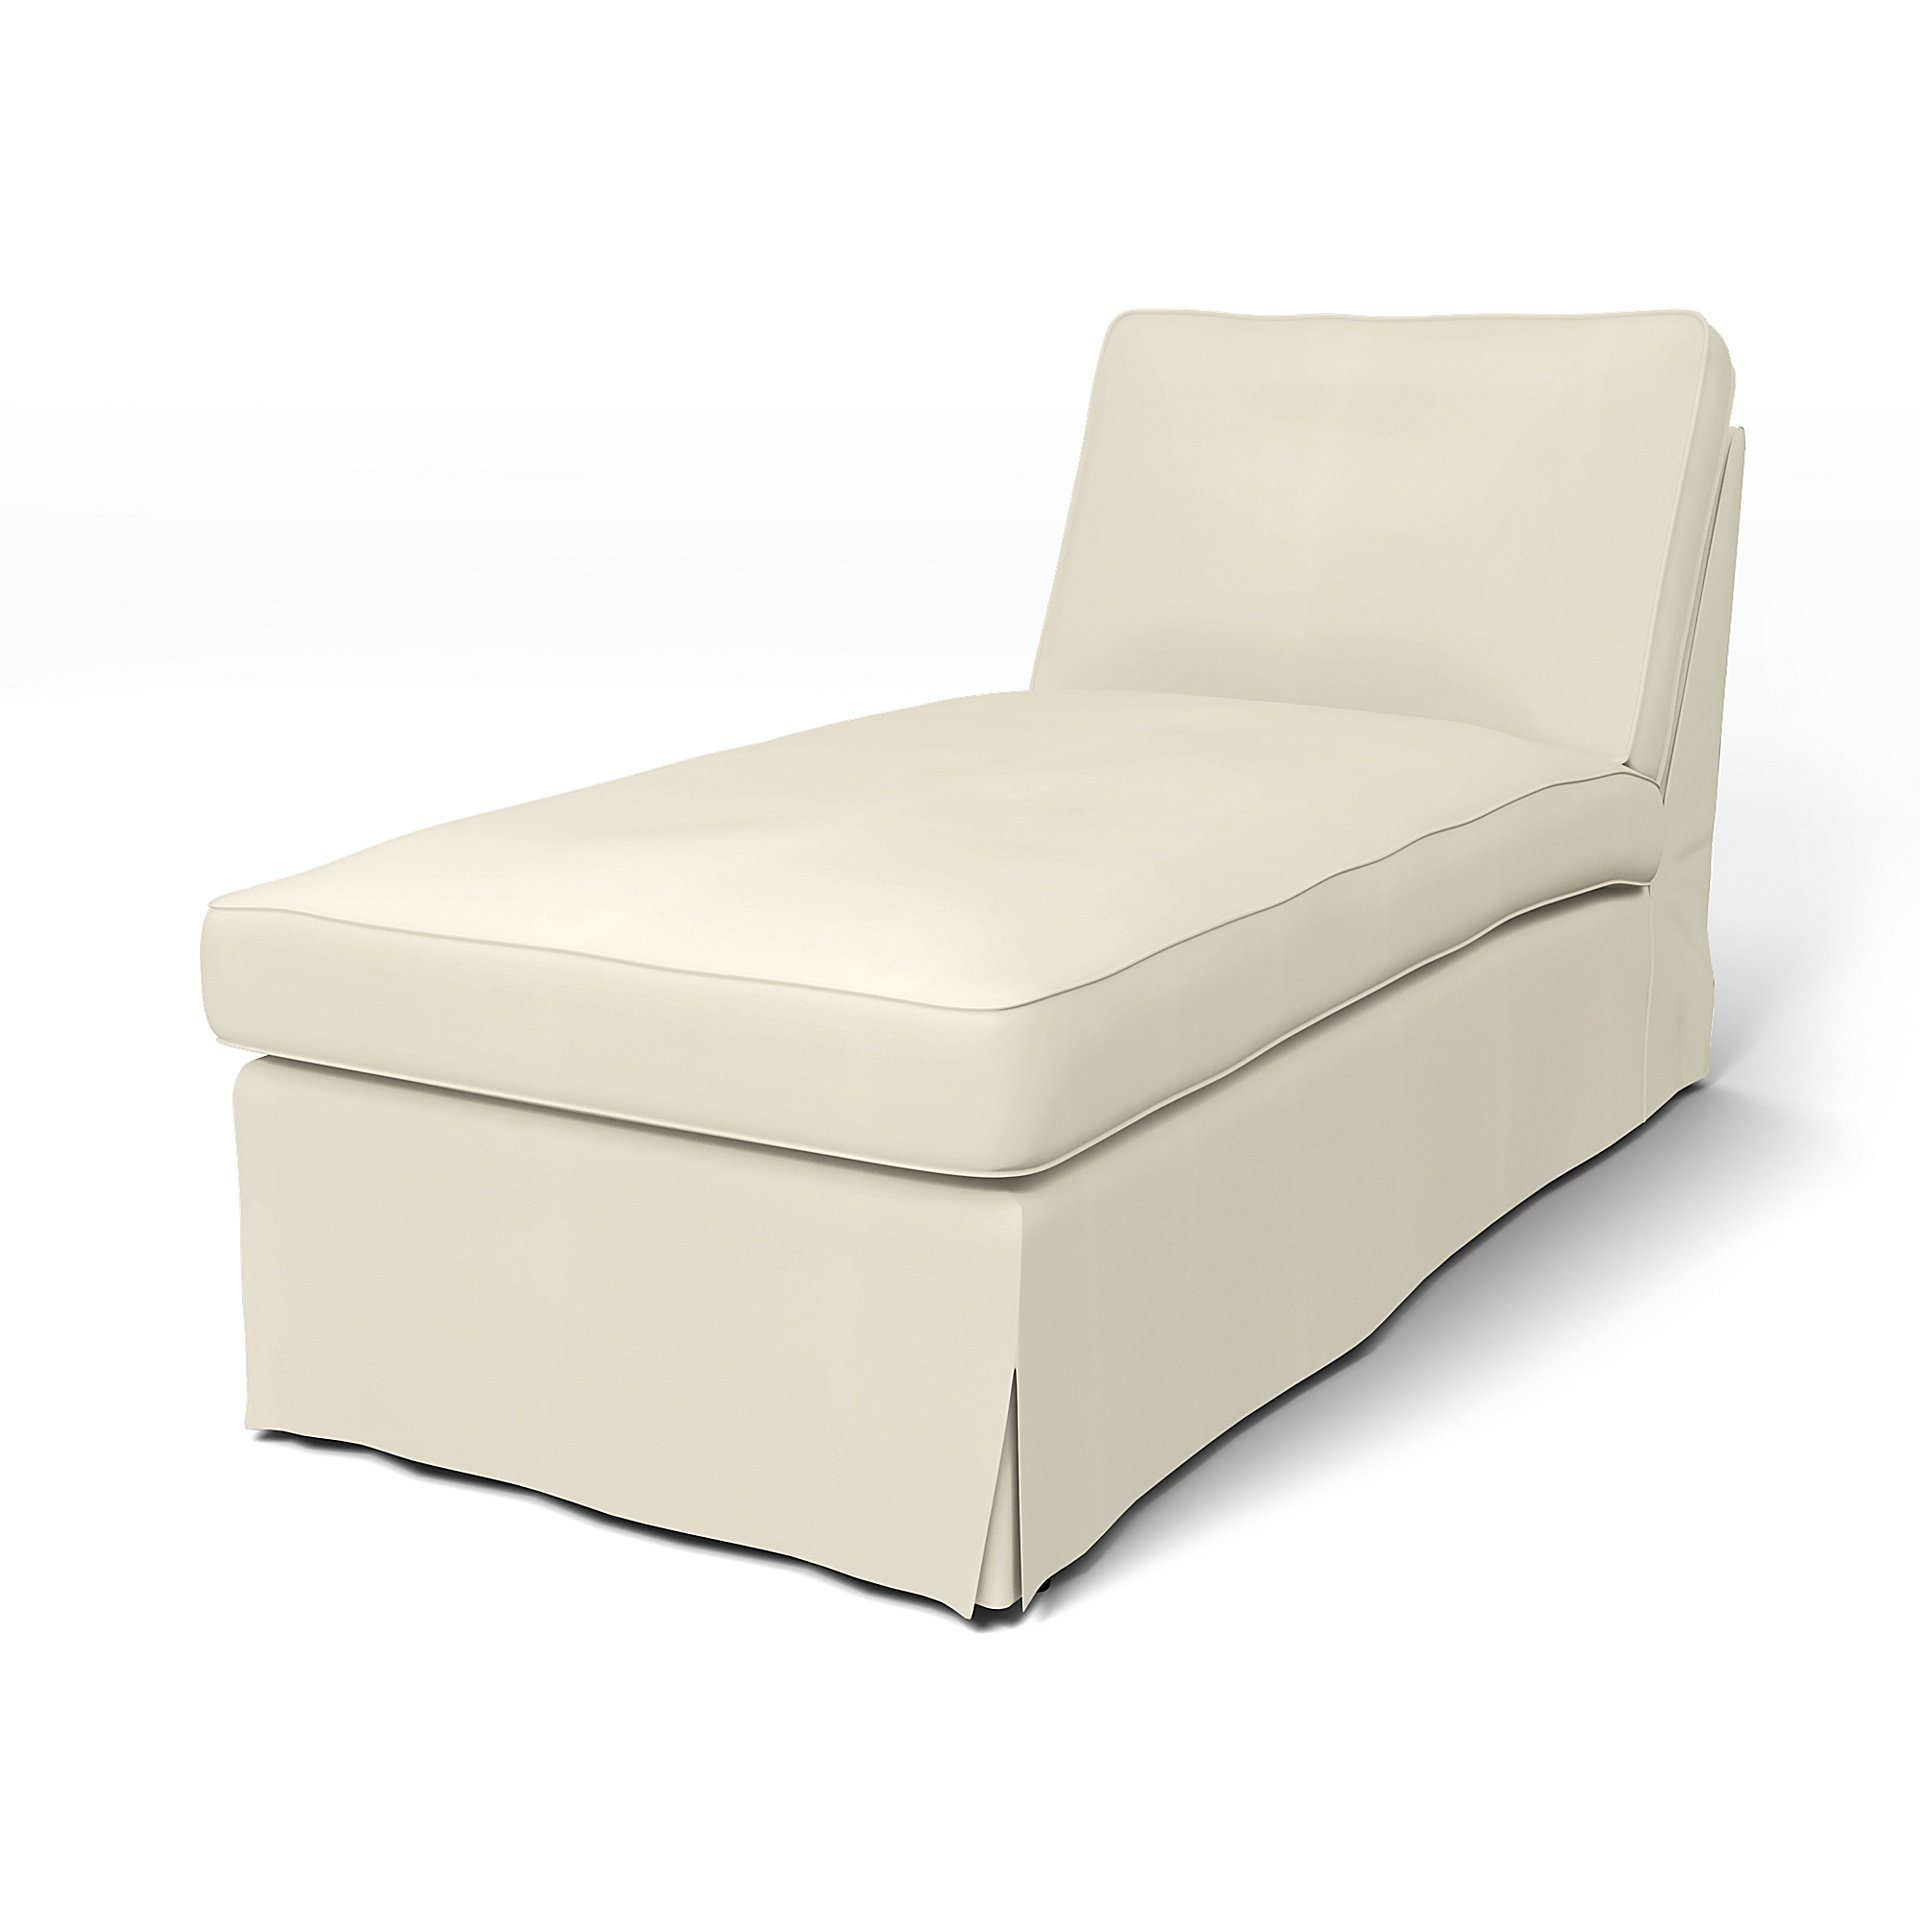 IKEA - Ektorp Chaise Longue Cover, Tofu, Cotton - Bemz